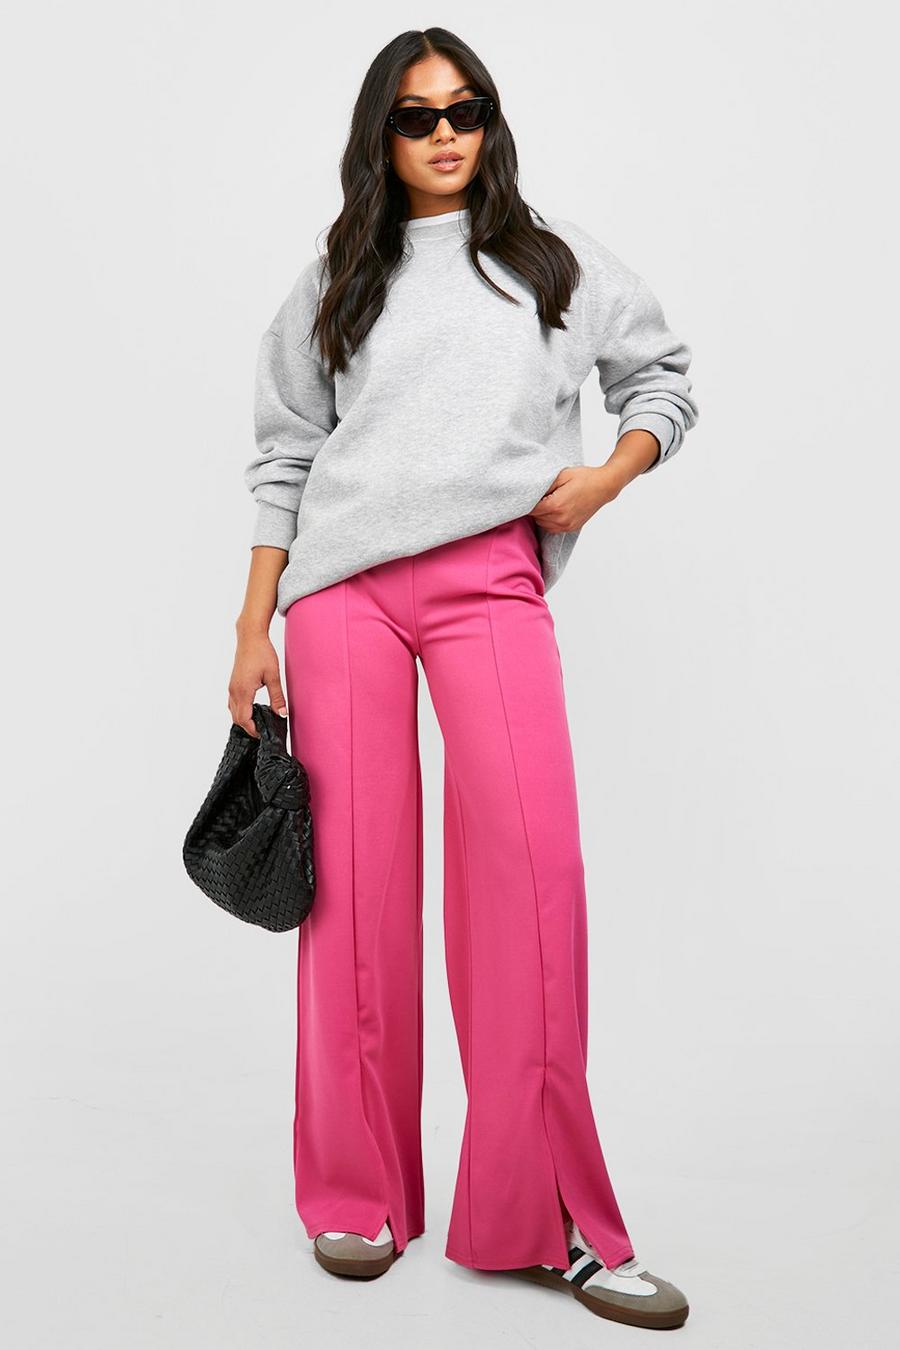 Petite - Pantalon stretch fendu, Hot pink